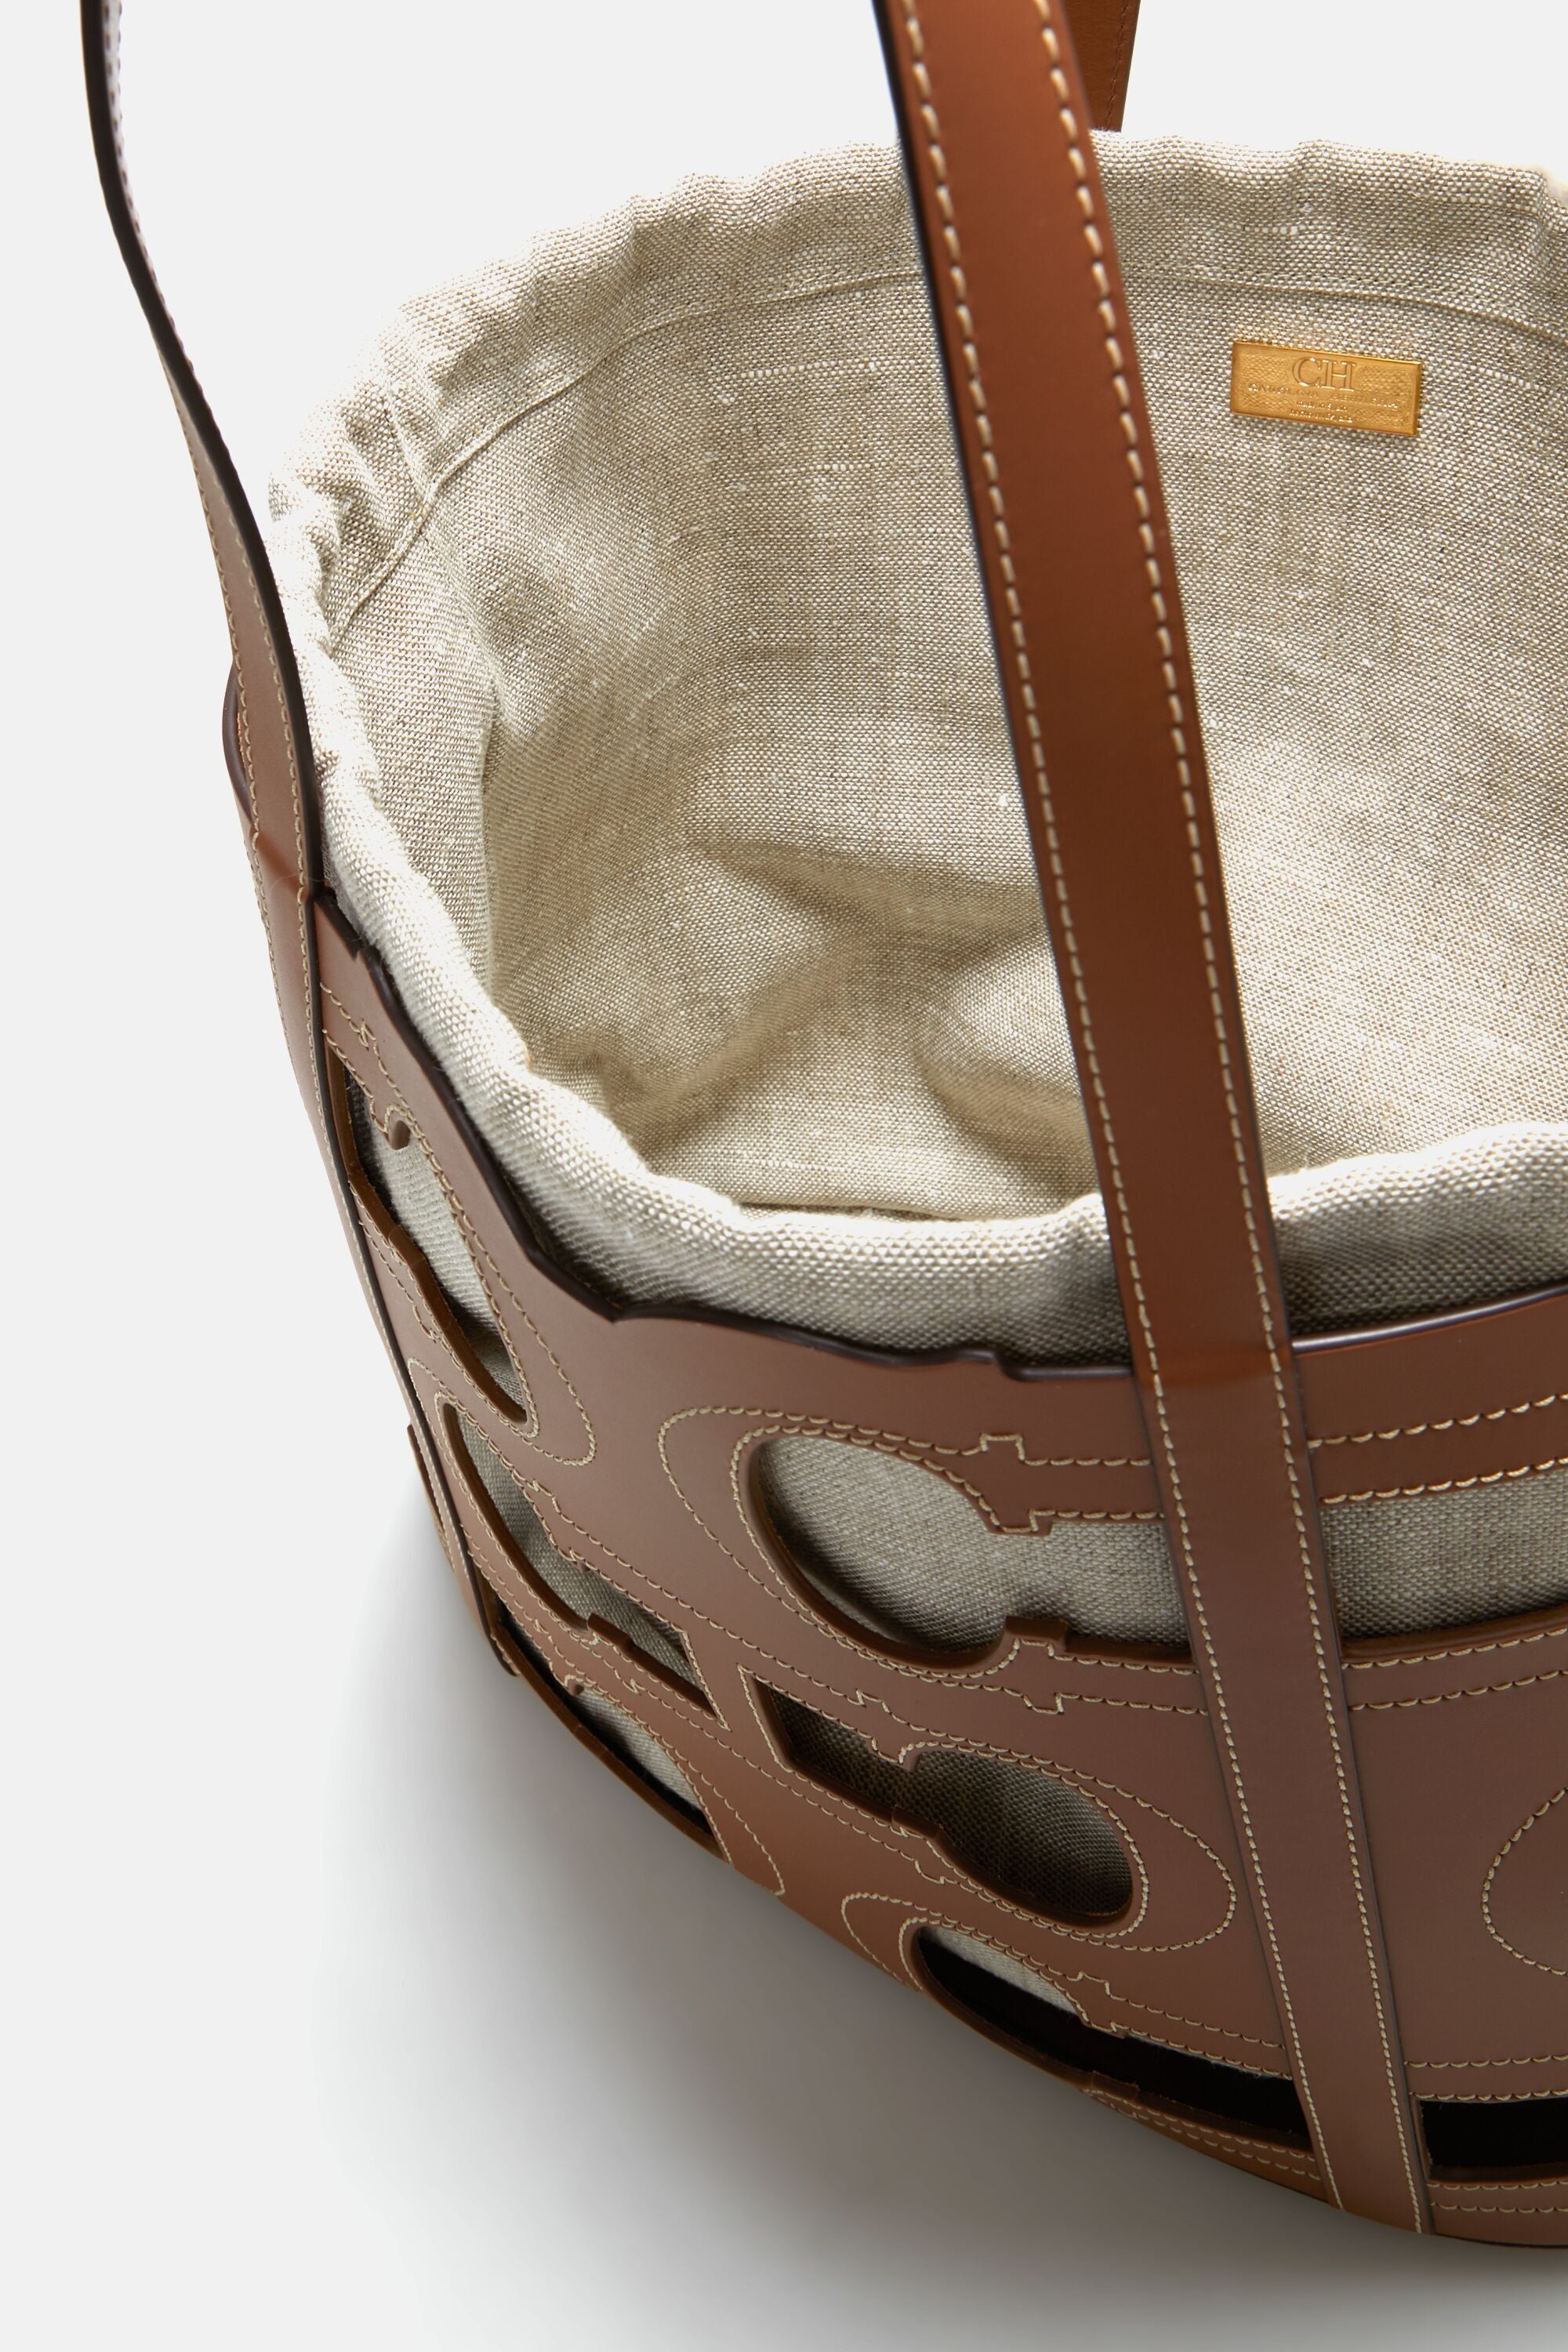 Carolina Herrera Tan Monogram Leather Medium Doma Insignia Shoulder Bag